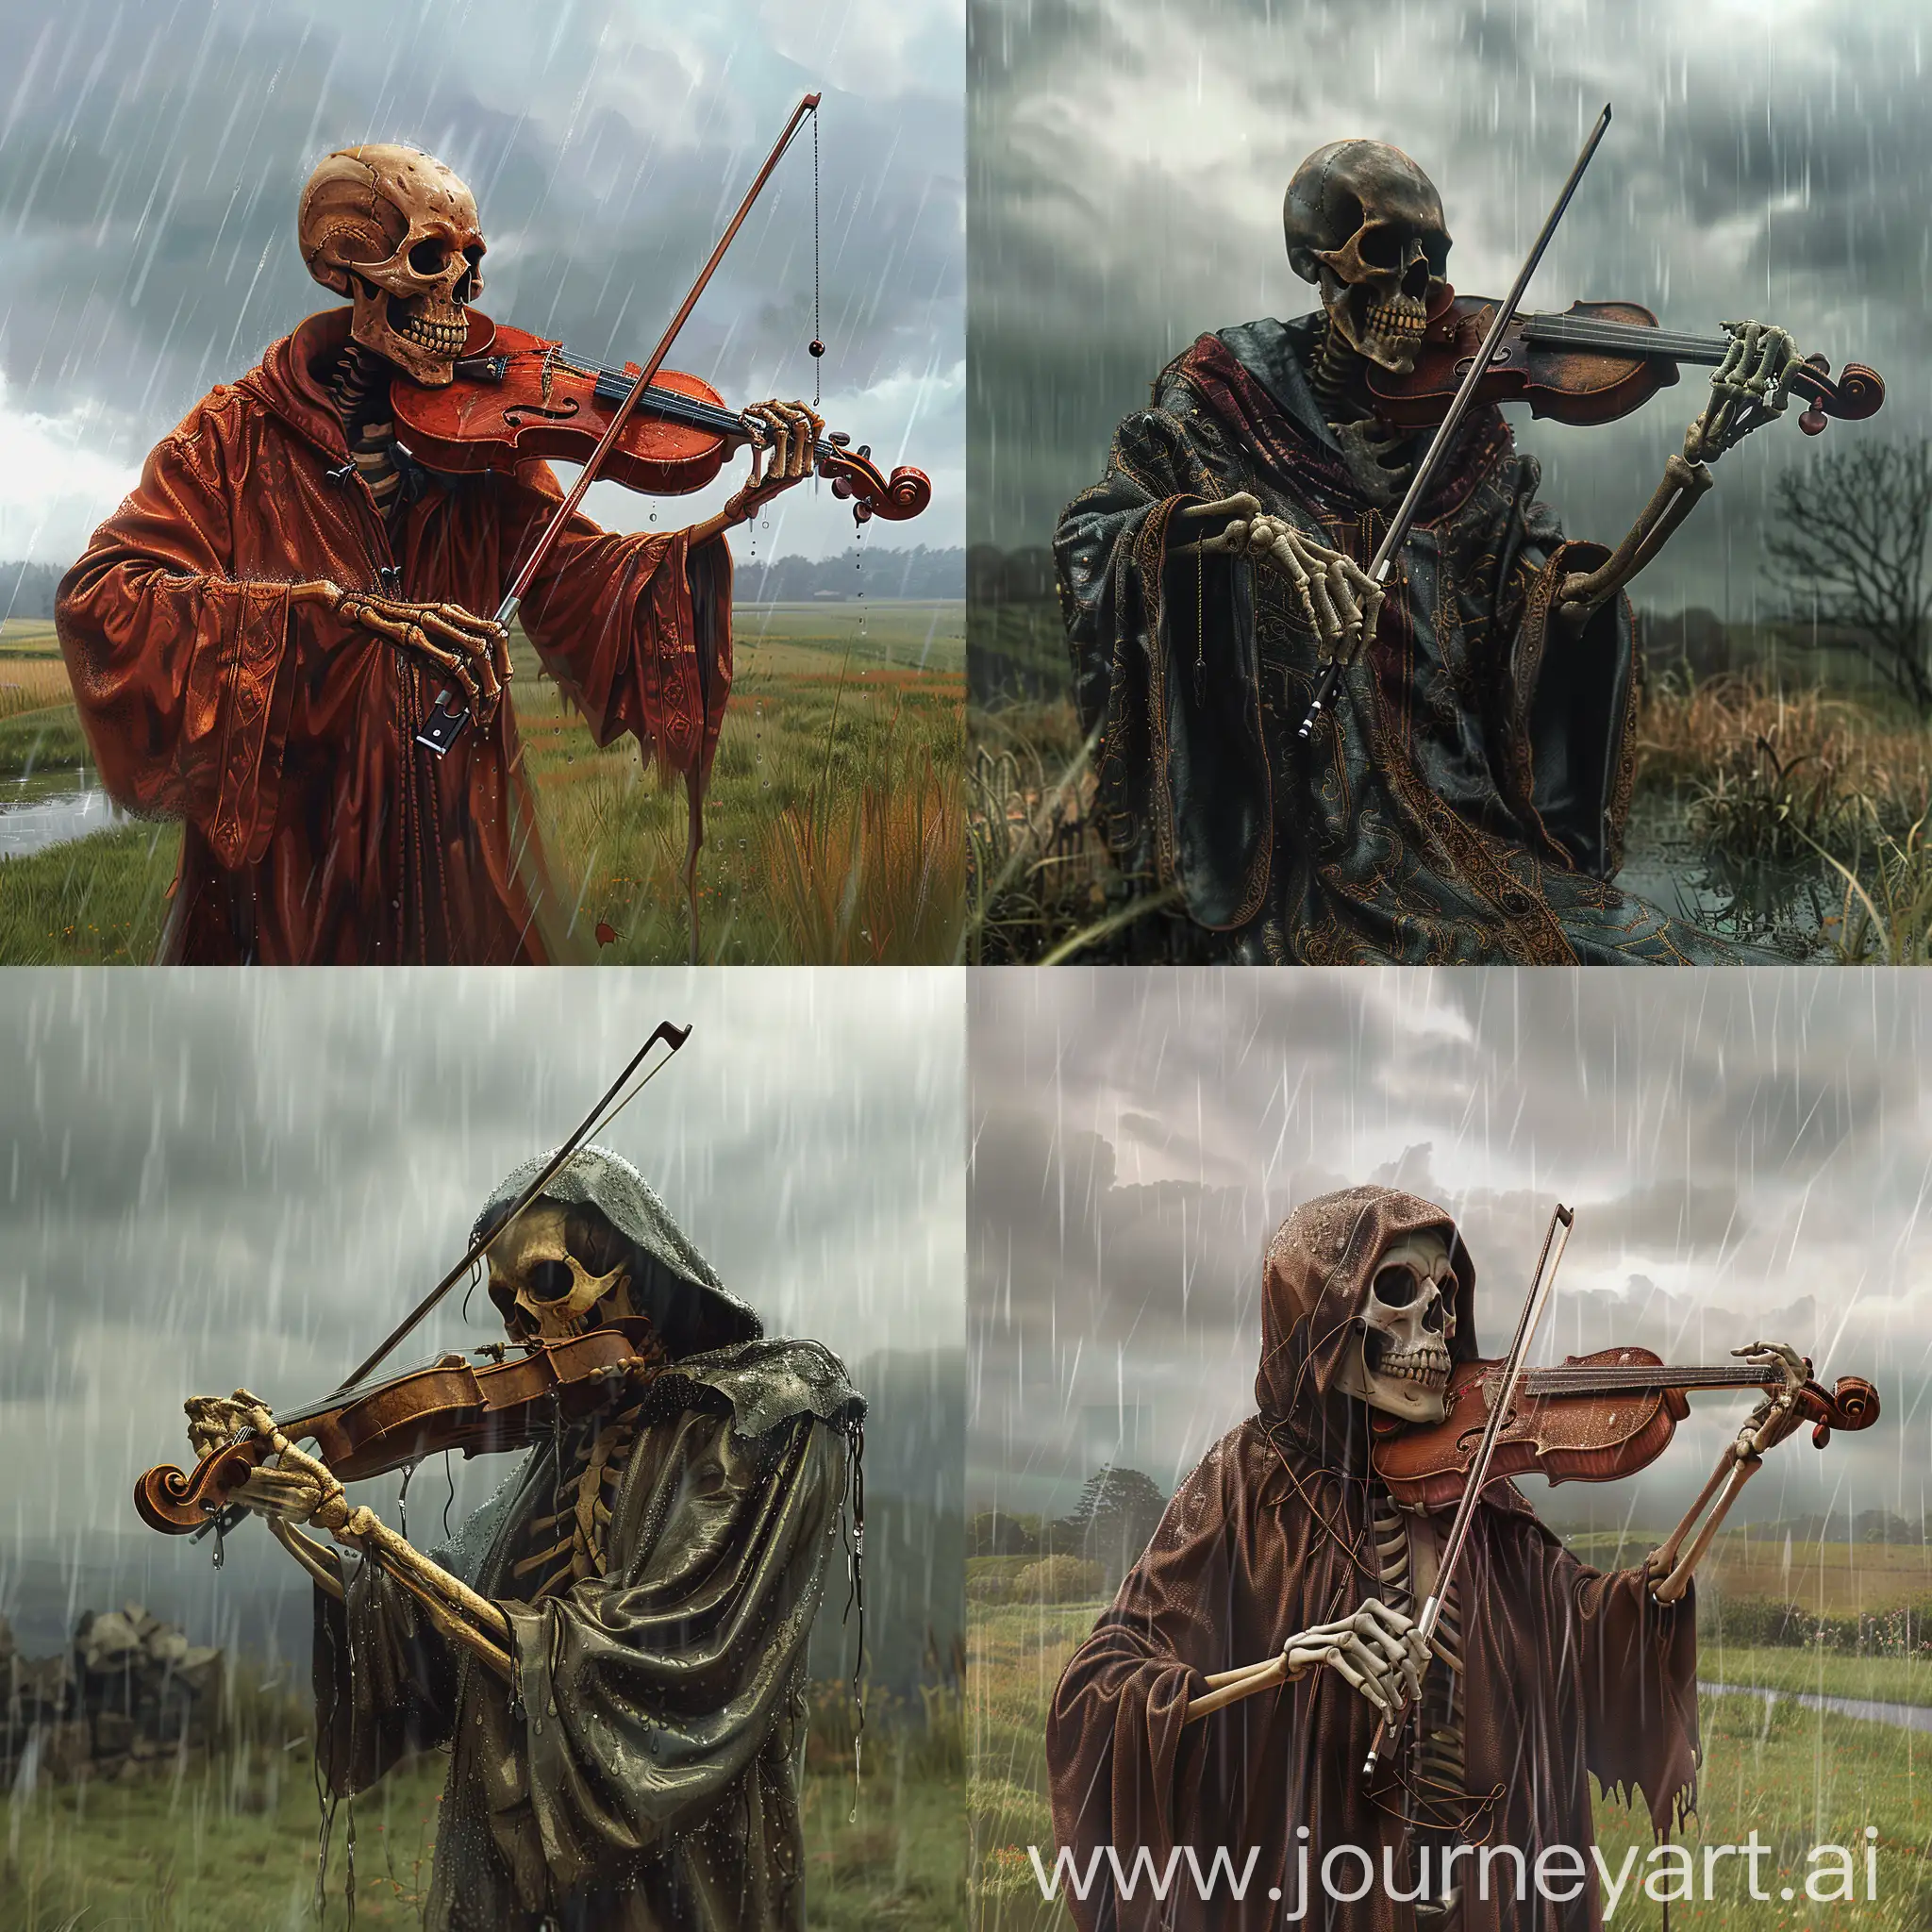 Skeleton bard wearing robe playing violin, in a rainy overcast field, incredible detail, digital art, fantasy,terrifying